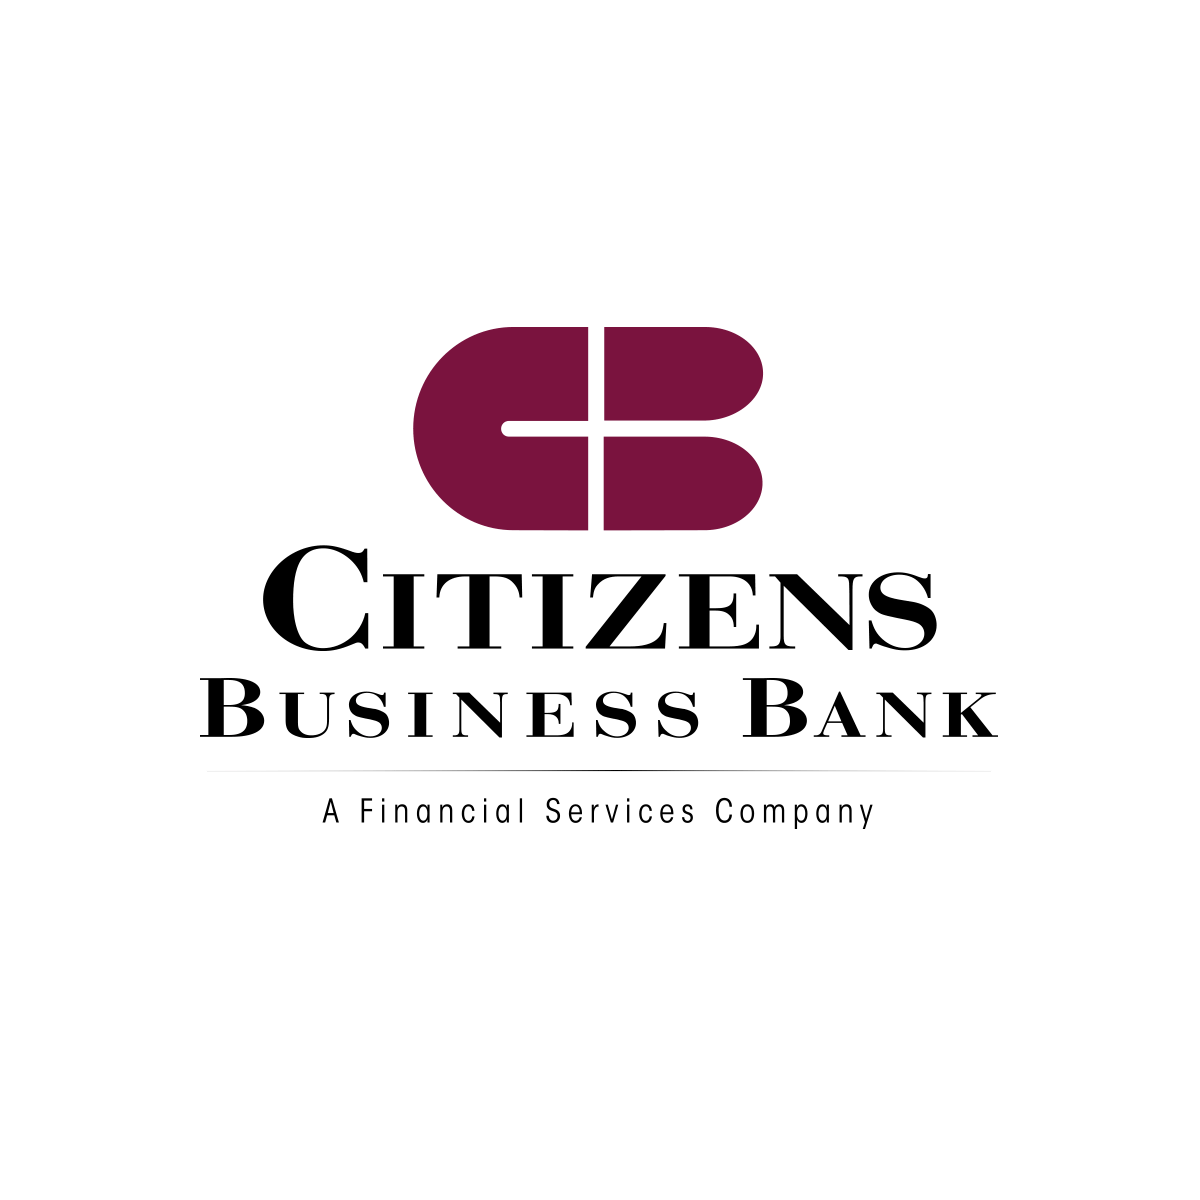 Bank Company Logo - Citizens Business Bank - A Financial Services Company